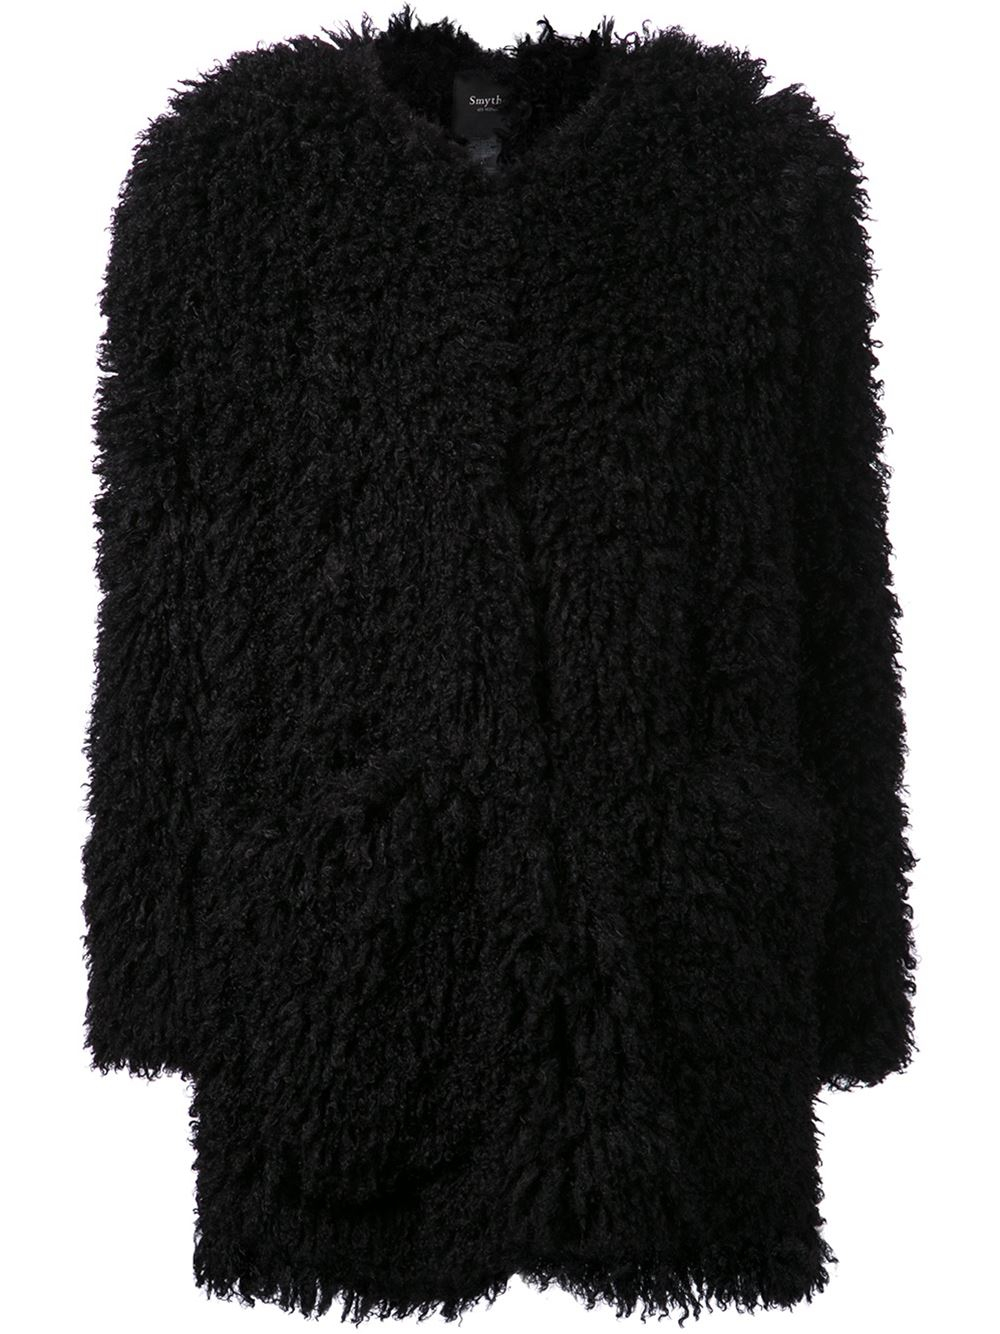 Lyst - Smythe Fuzzy Jacket in Black